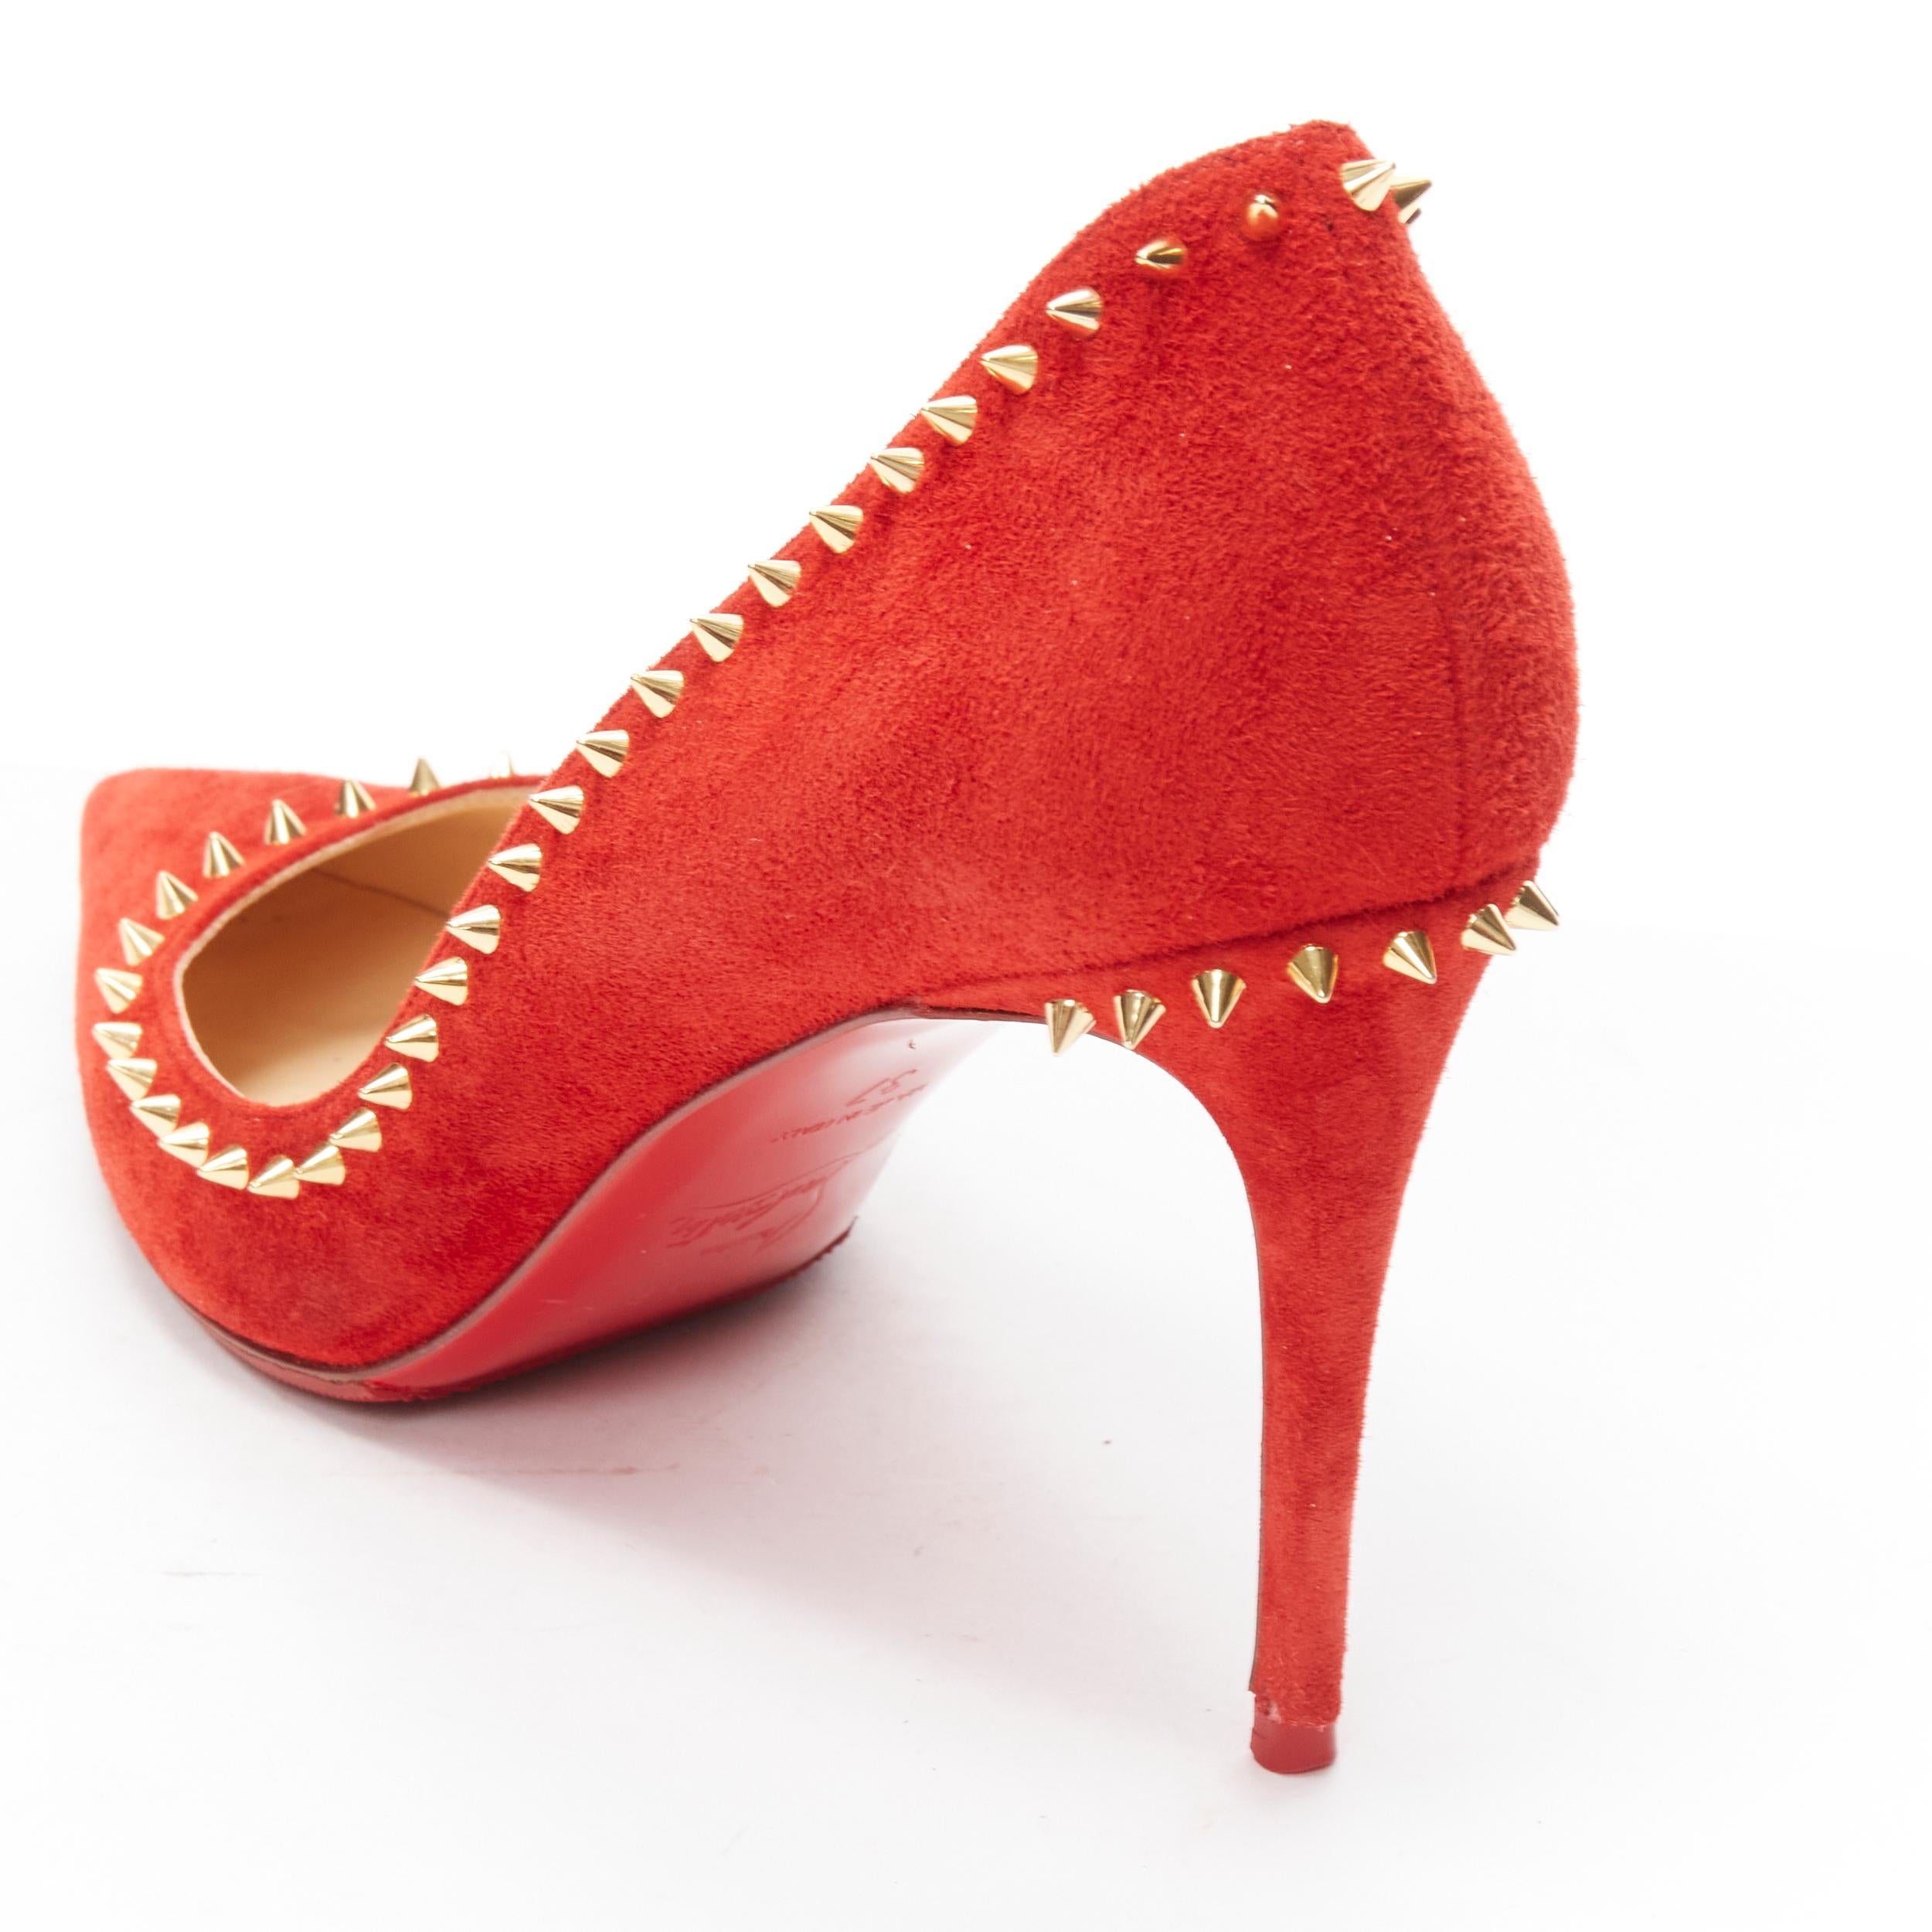 CHRISTIAN LOUBOUTIN Anjalina 85 red suede gold spike stud high heel pumps EU37 For Sale 3